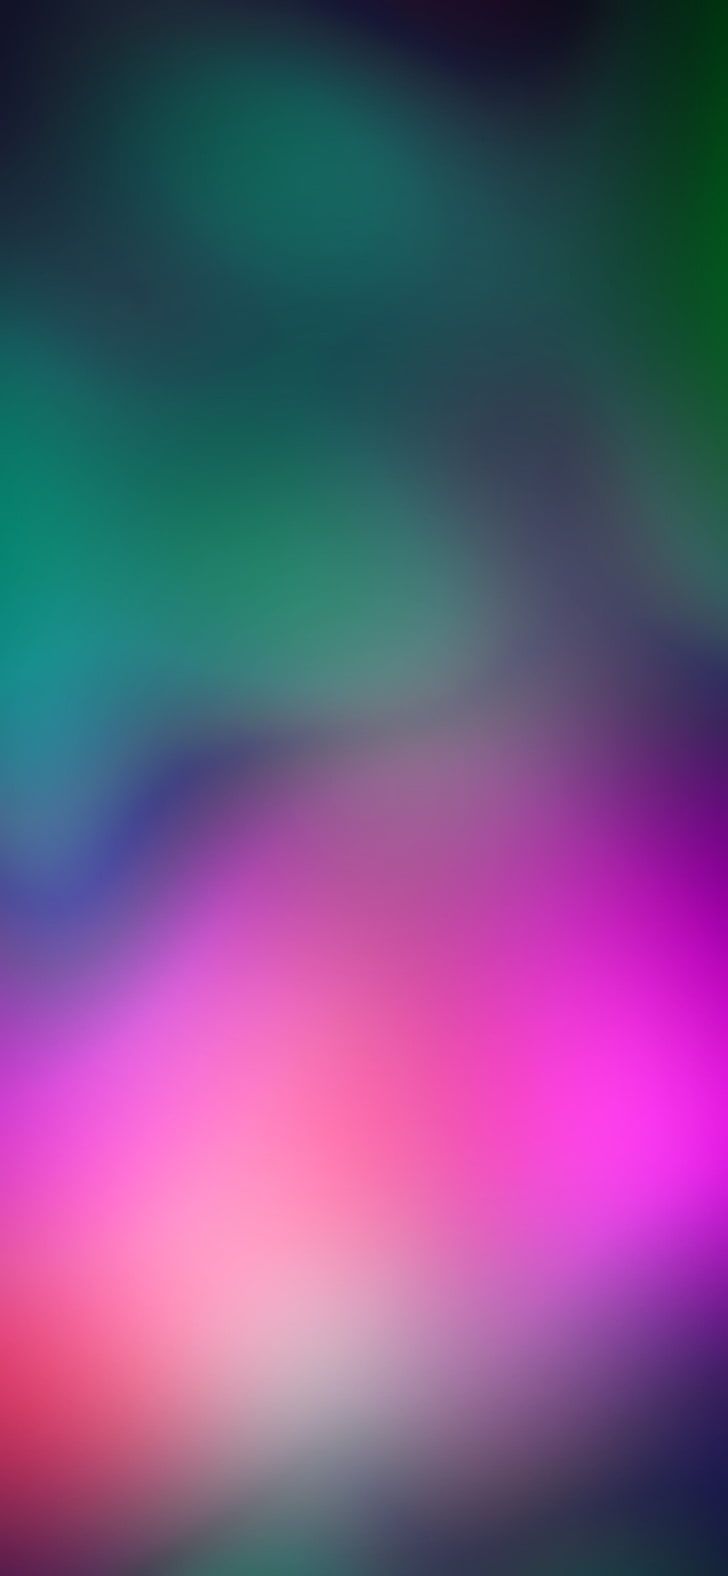 HD wallpaper: Ipod, iPhone, iPad, iOS, colorful, portrait display, multi colored